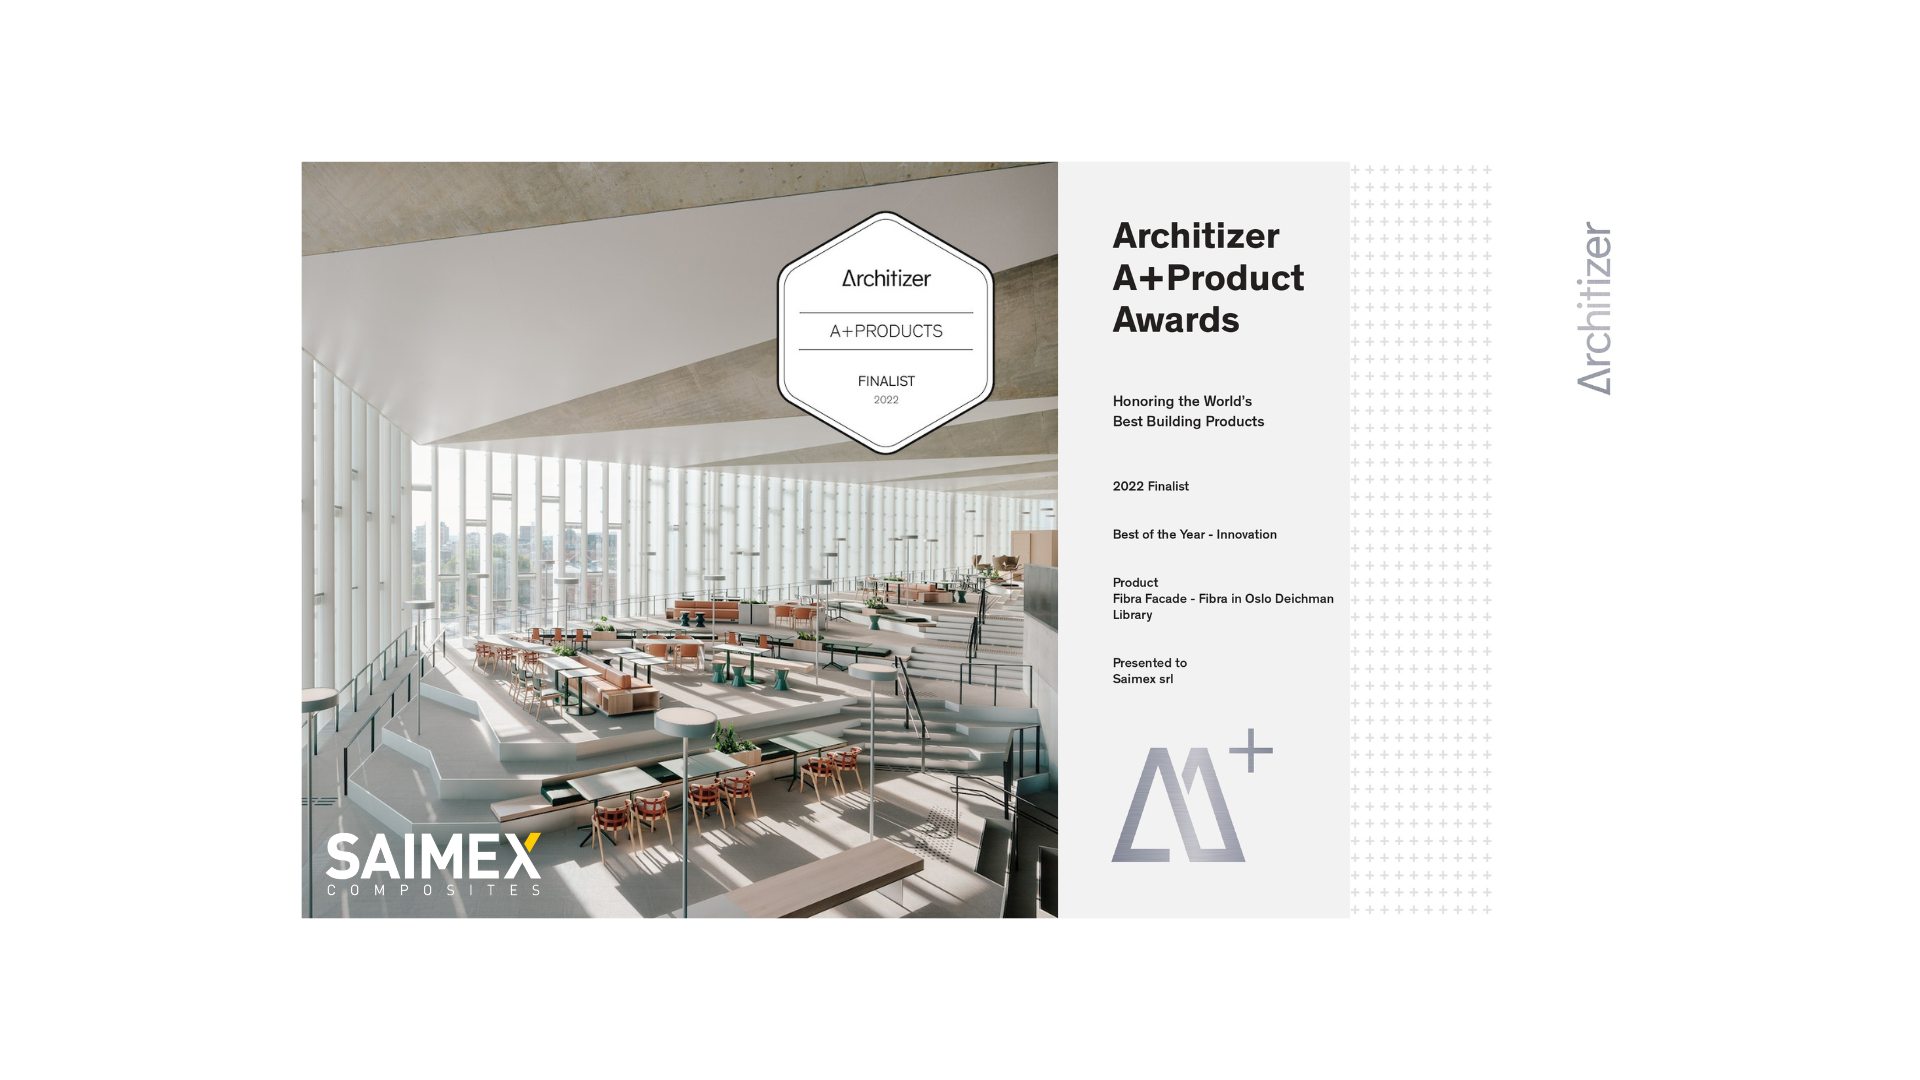 Saimex Srl - Architizer Finalist Award